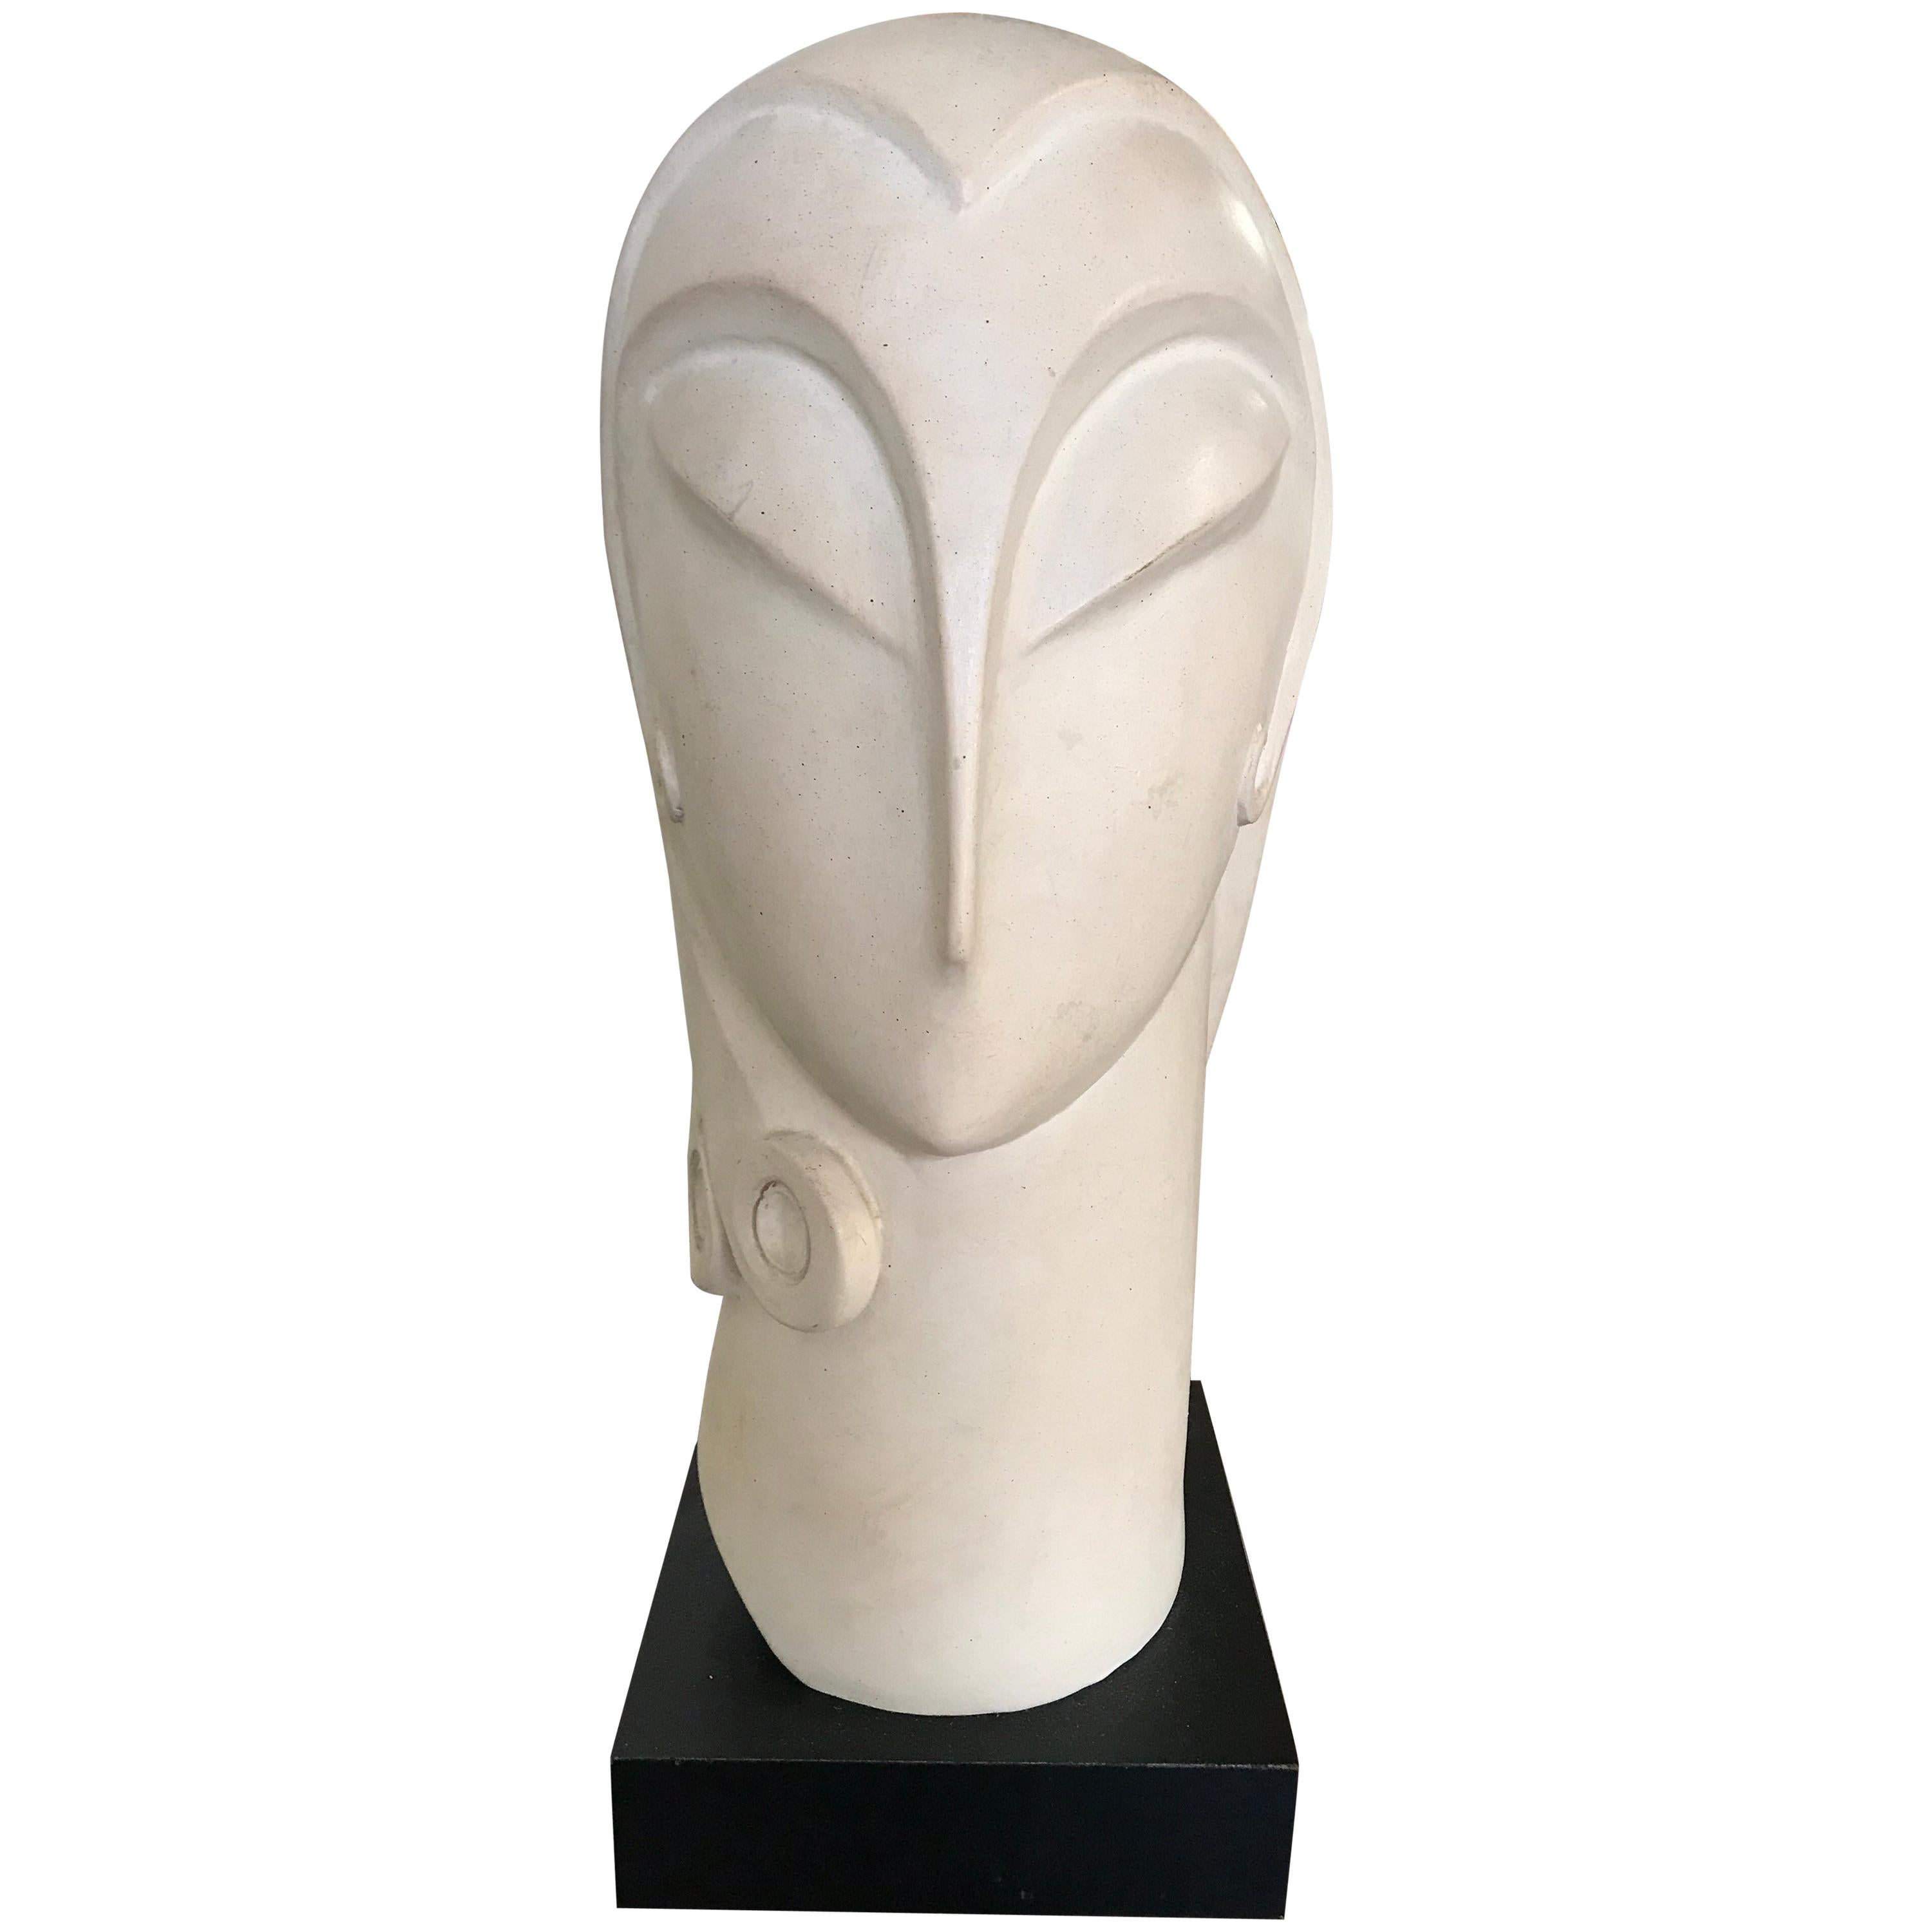 Postmodern Brancusi Style French Art Deco Moderne Plaster Head Bust Sculpture